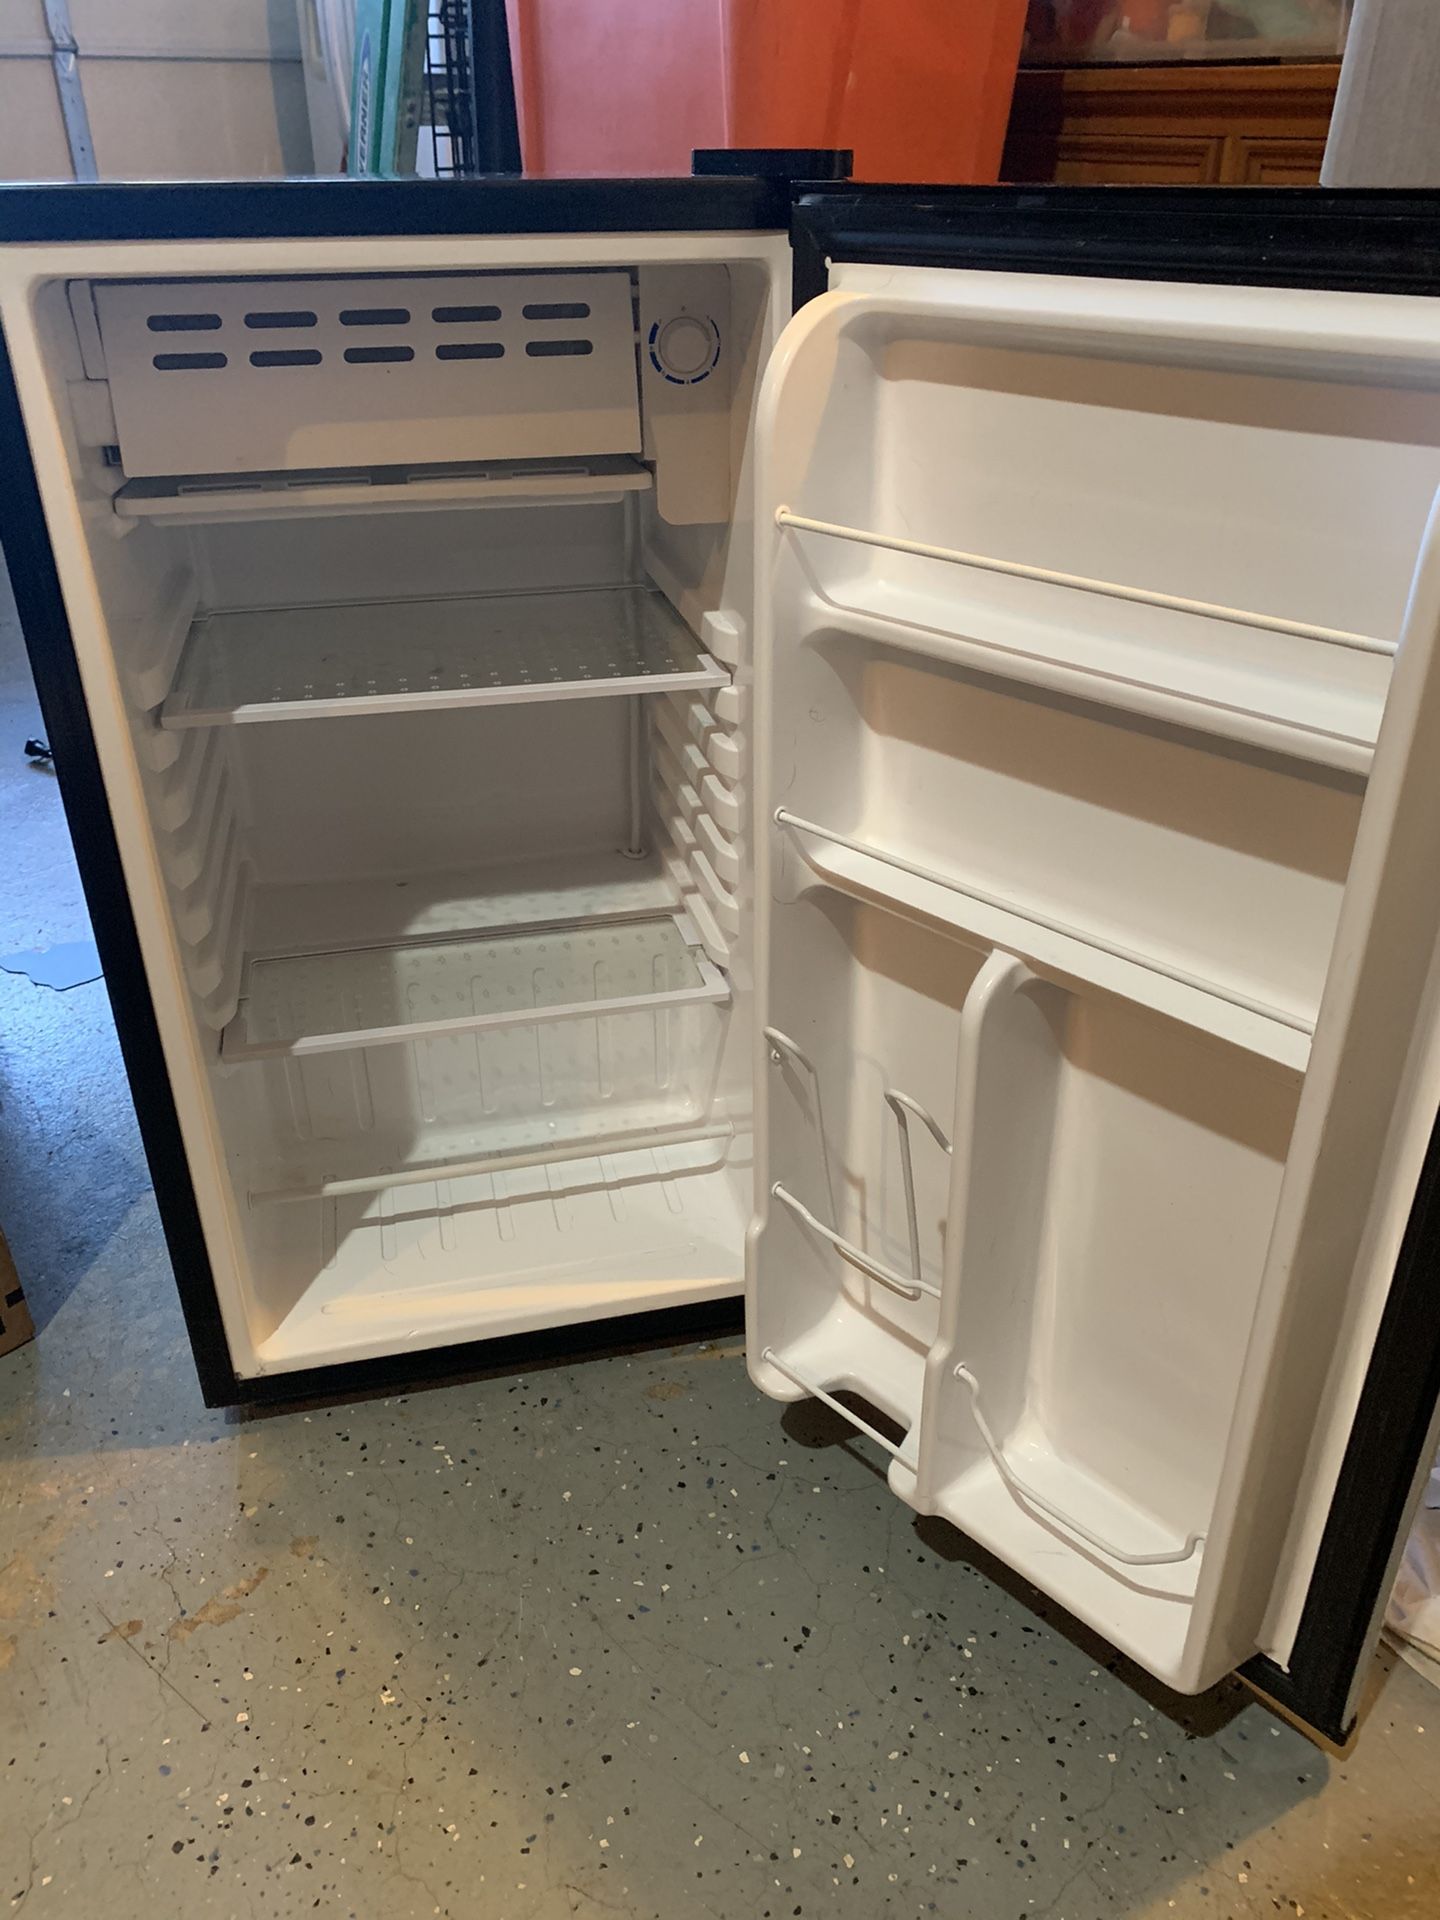 Igloo mini fridge